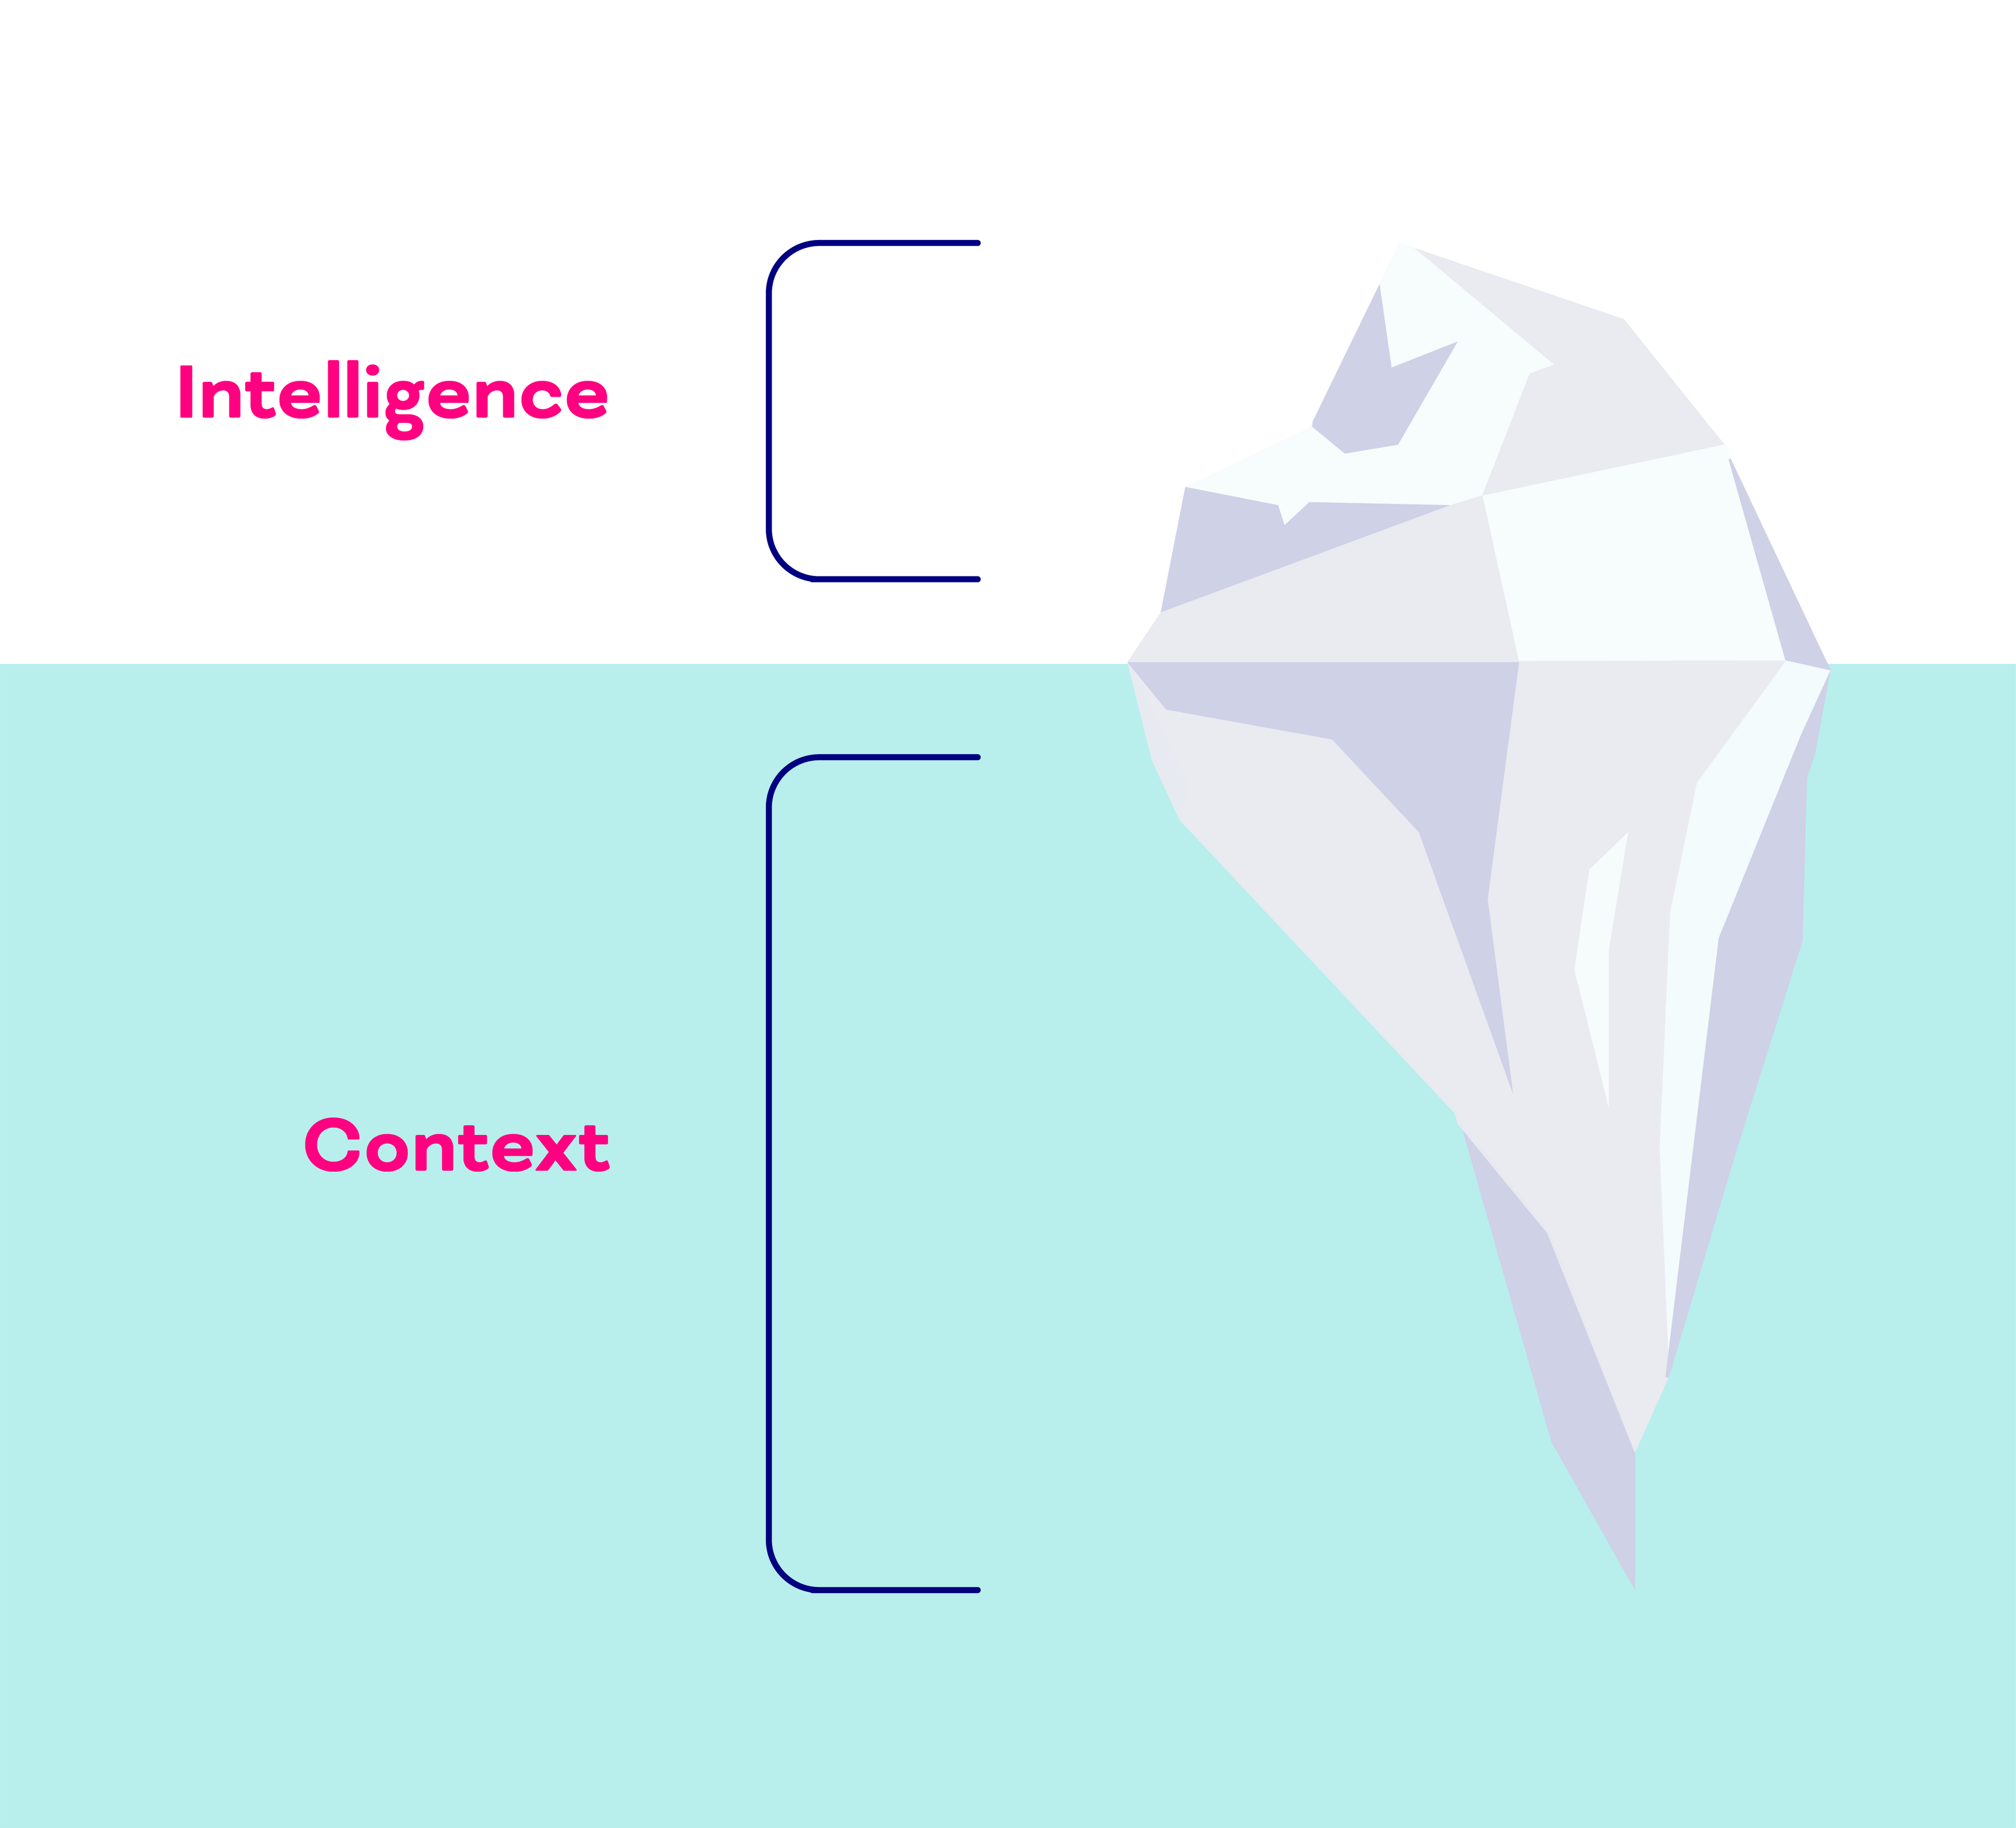 Iceberg intelligence in context